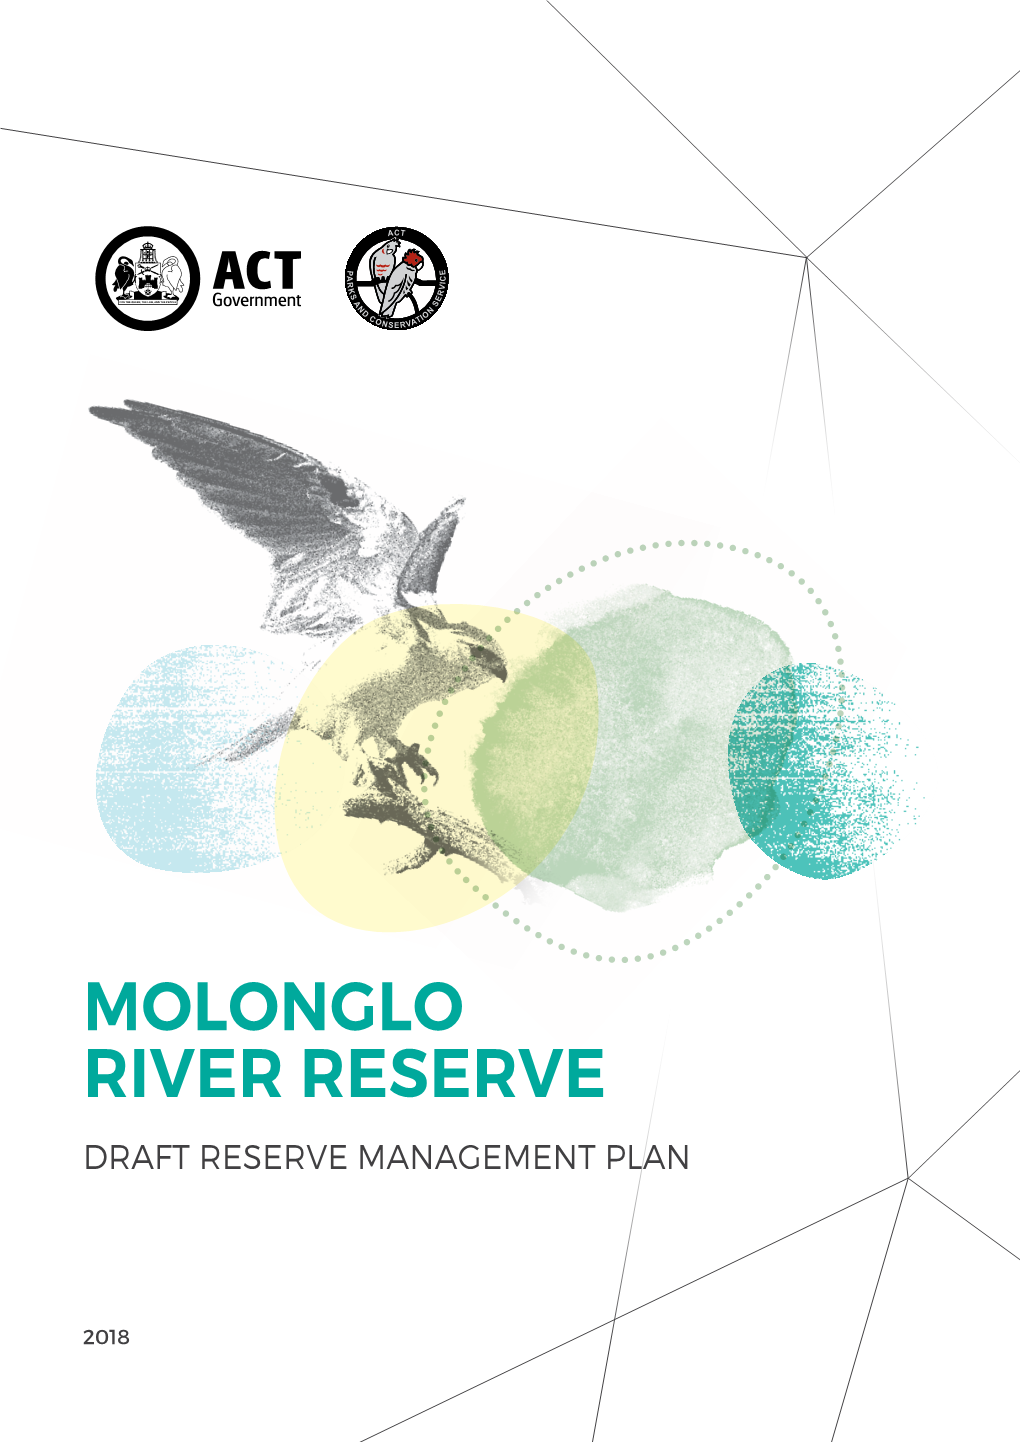 Molonglo River Reserve Draft Reserve Management Plan